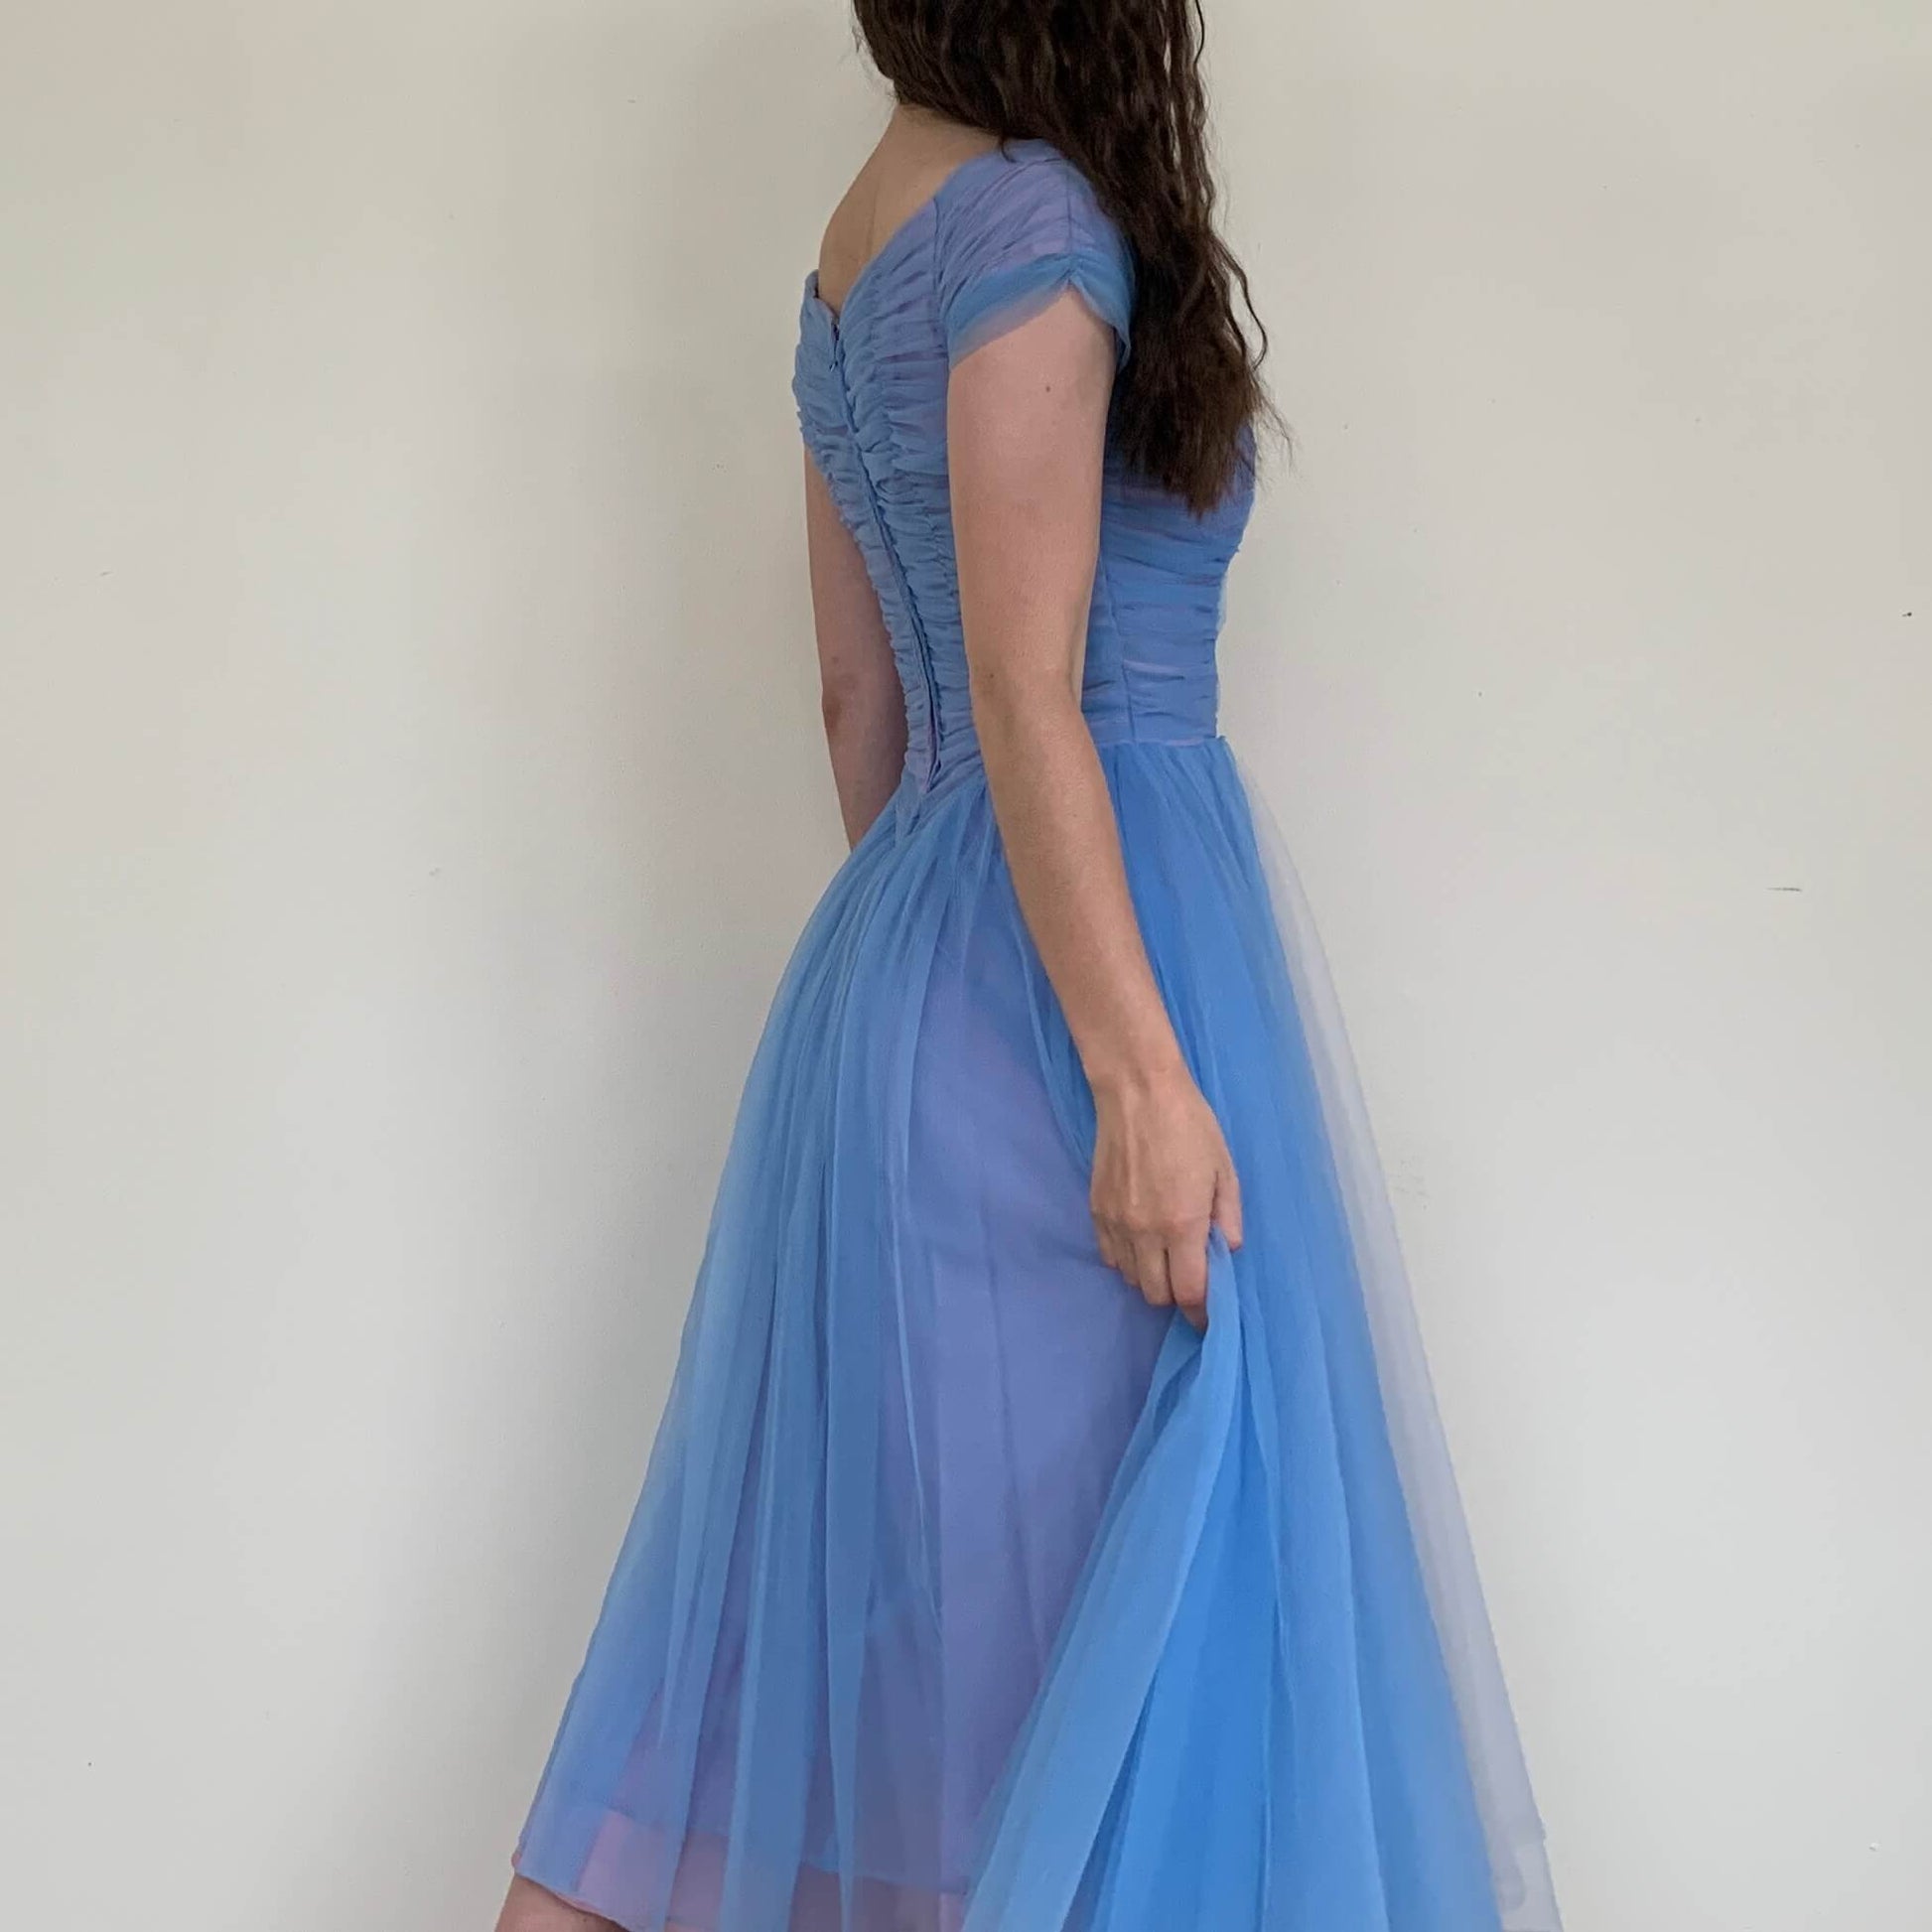 blue 50s dress side view